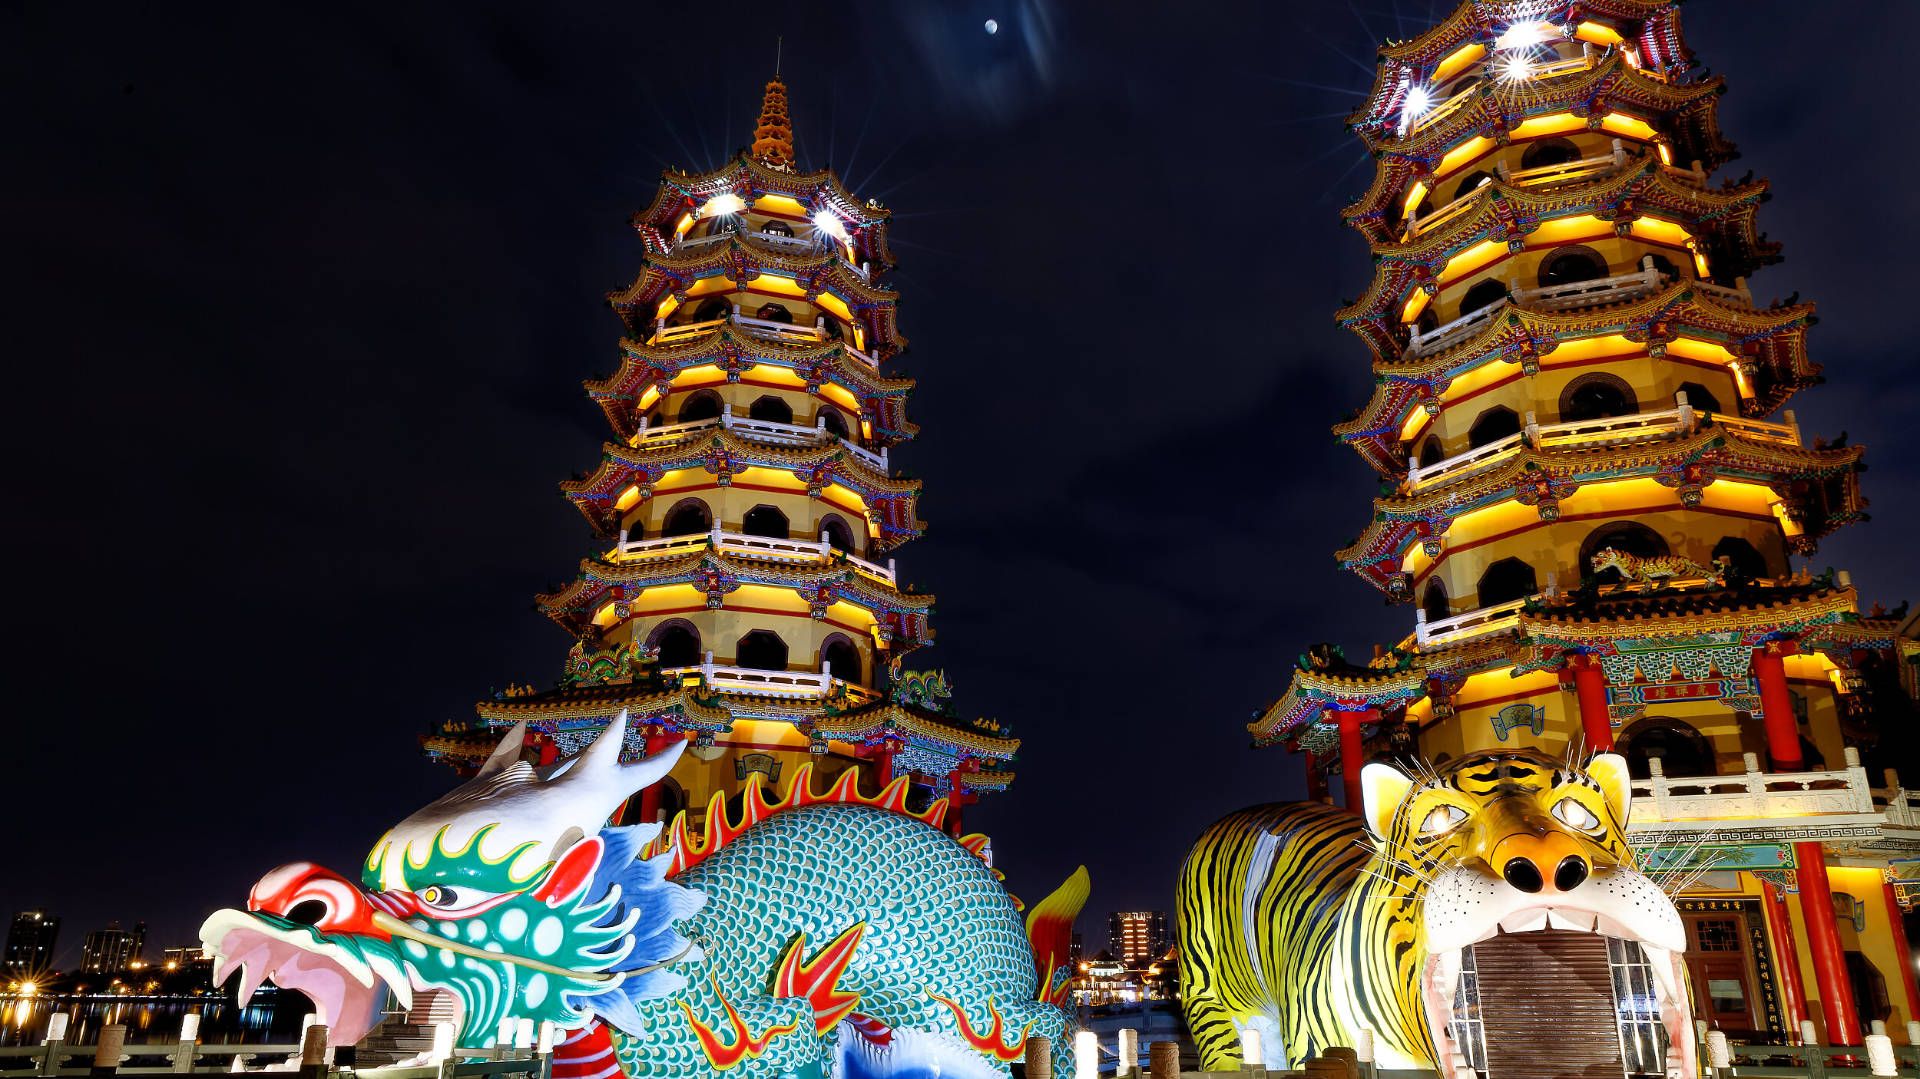 Night-time photo of the Dragon and Tiger Pagodas at Lotus Pond, Kaohsiung.